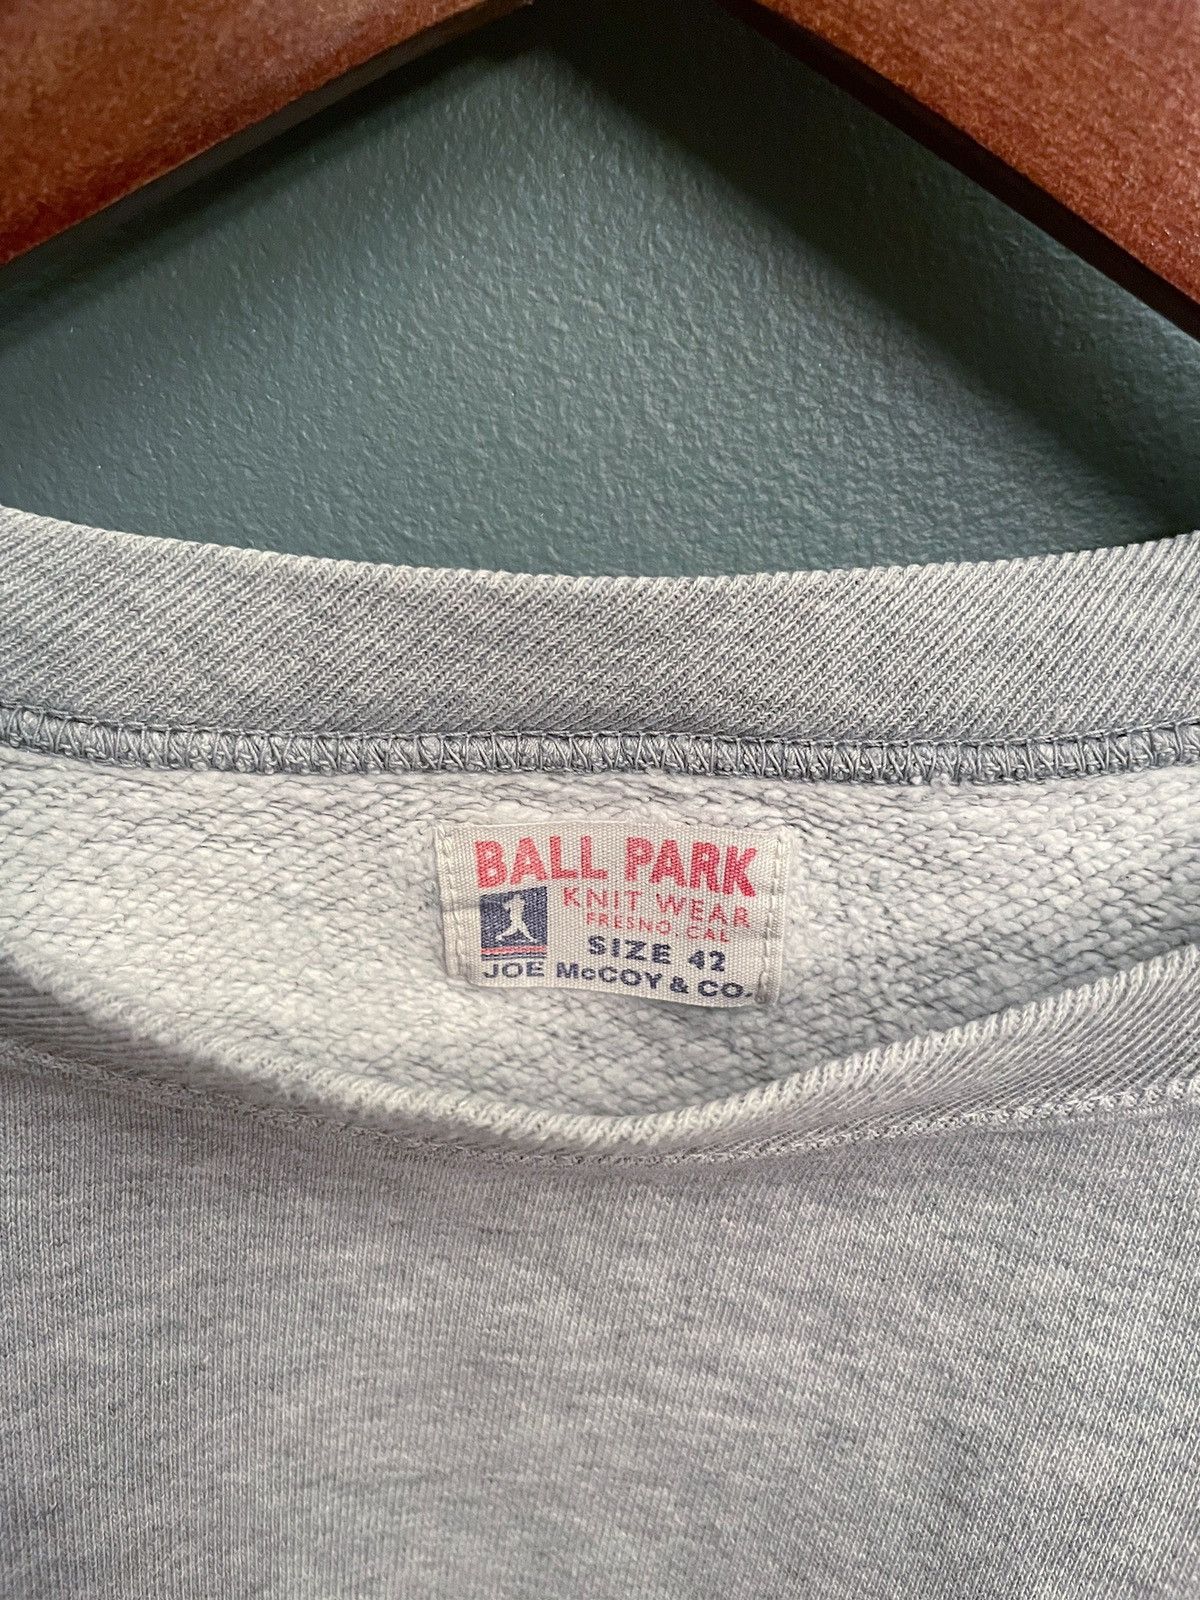 The Real McCoy's Joe Mccoy Ballpark 2-tone Freedom Sleeve Sweatshirt Size US M / EU 48-50 / 2 - 2 Preview